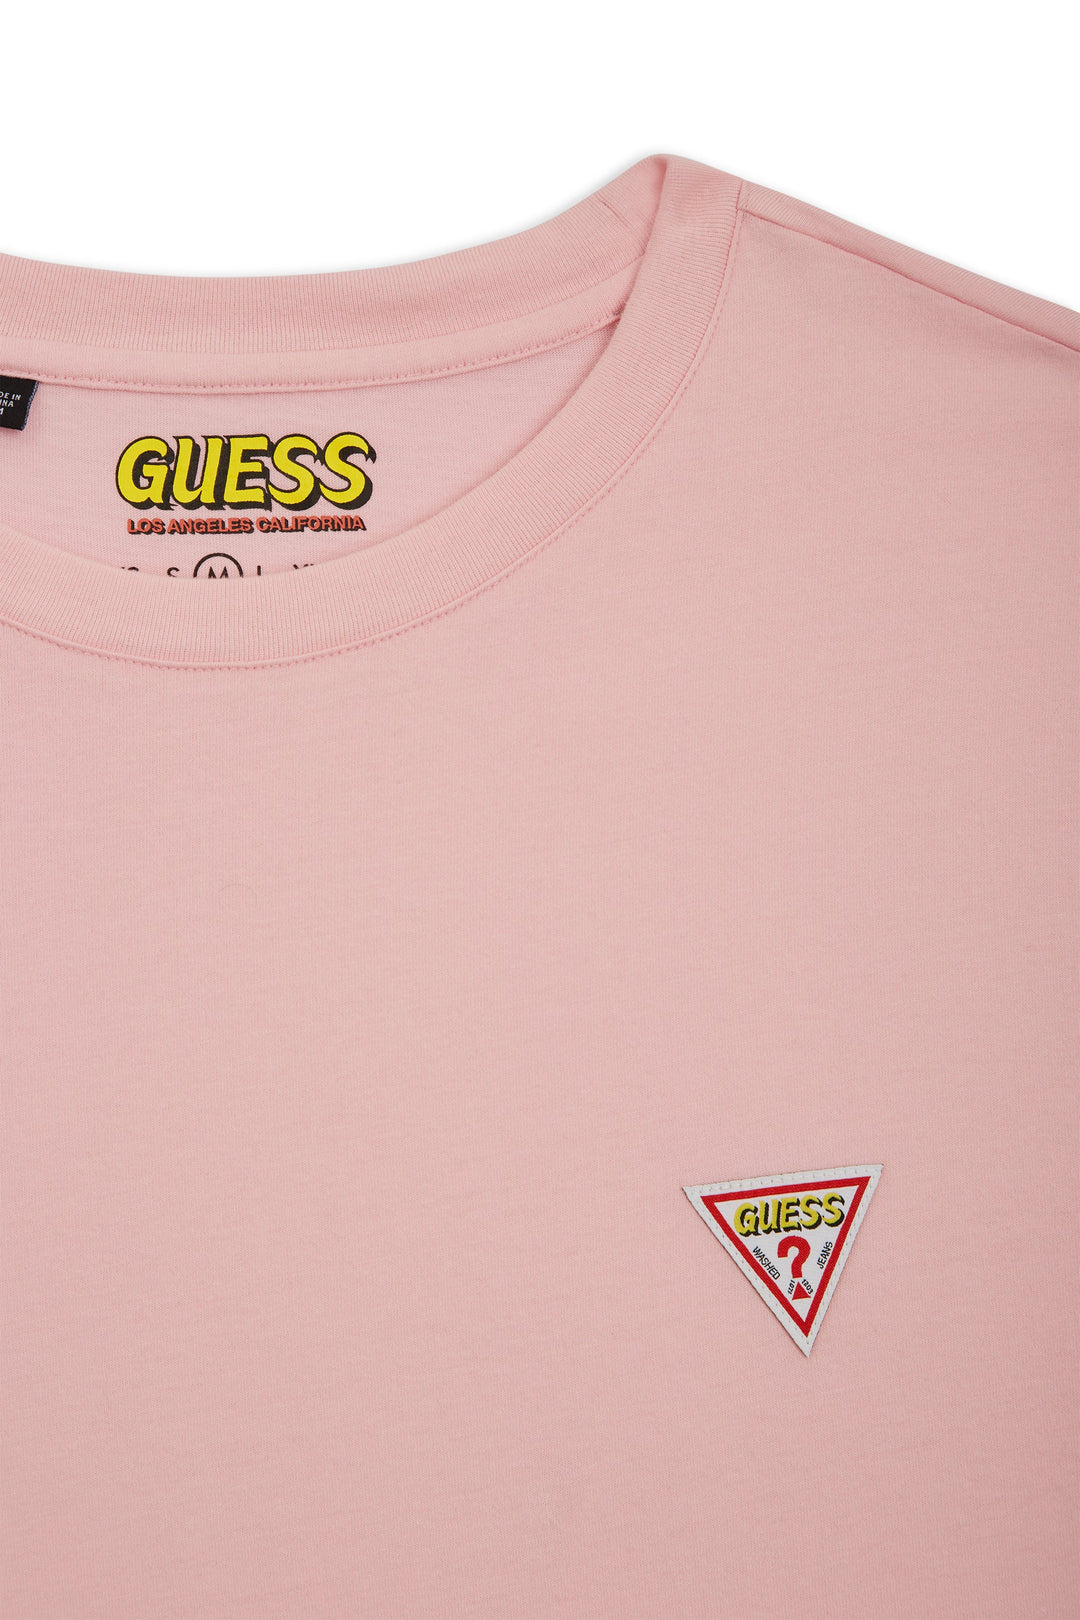 GUESS / Mickey & Friends - Unisex Short Sleeve Logo Tee - Guess